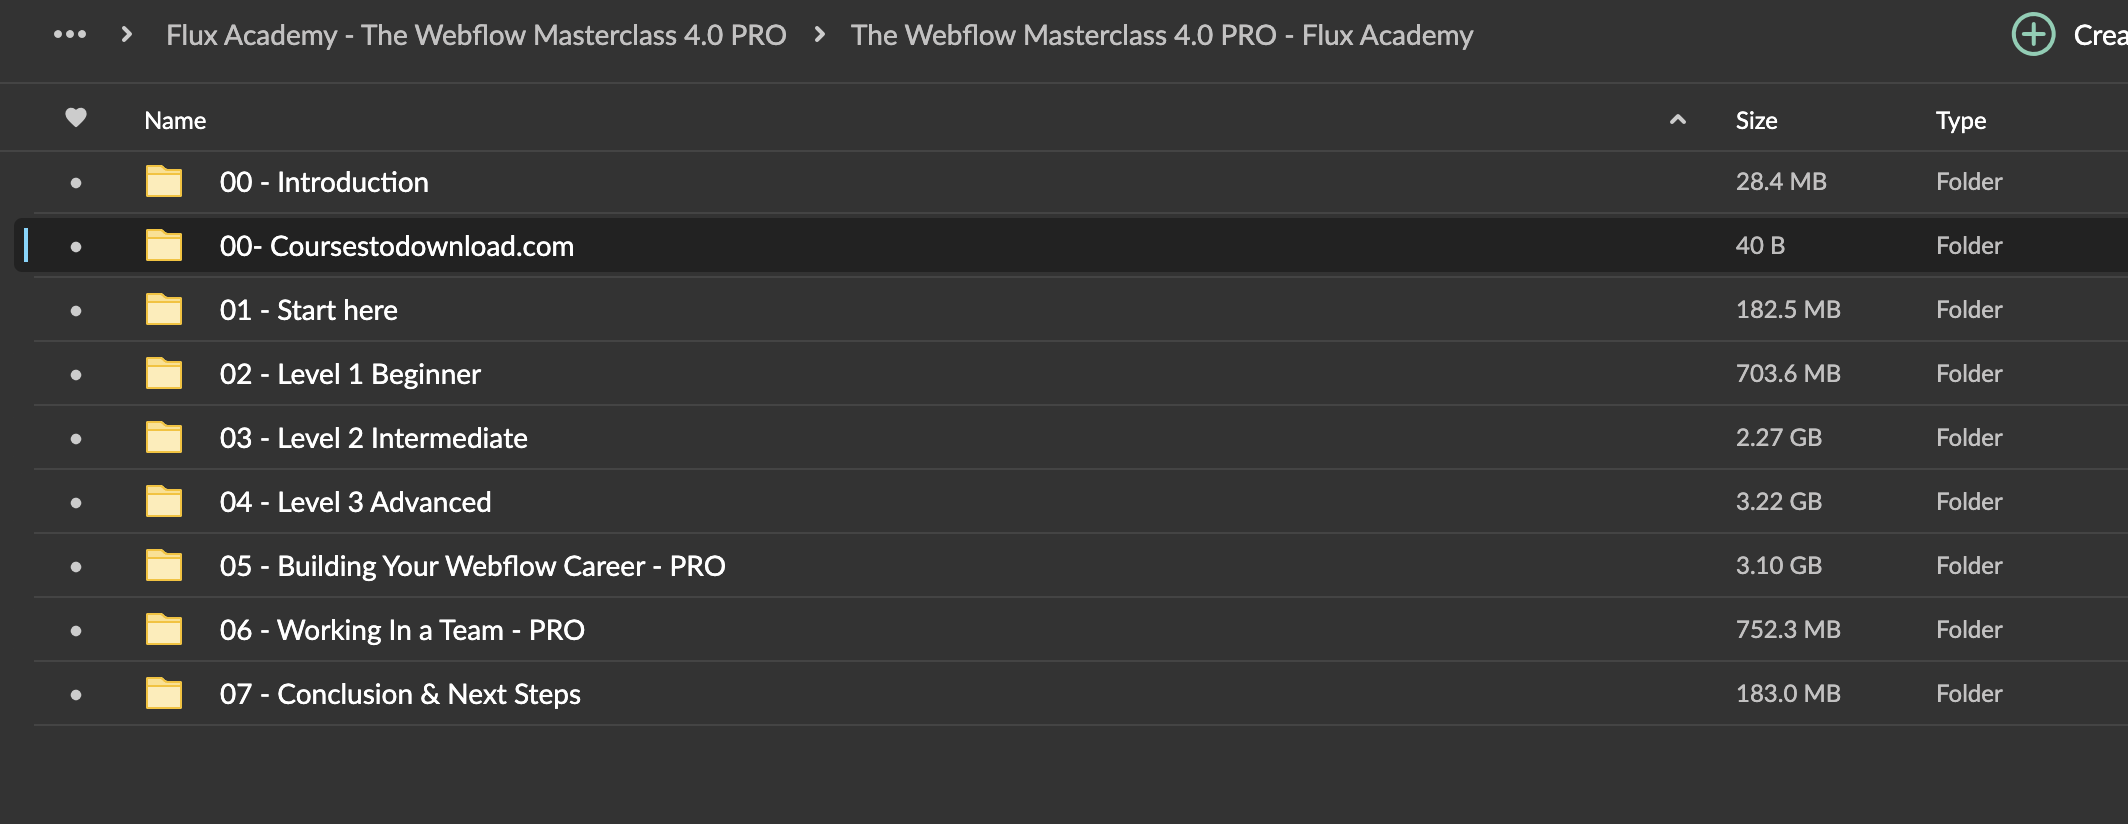 Flux Academy - The Webflow Masterclass 4.0 PRO Download